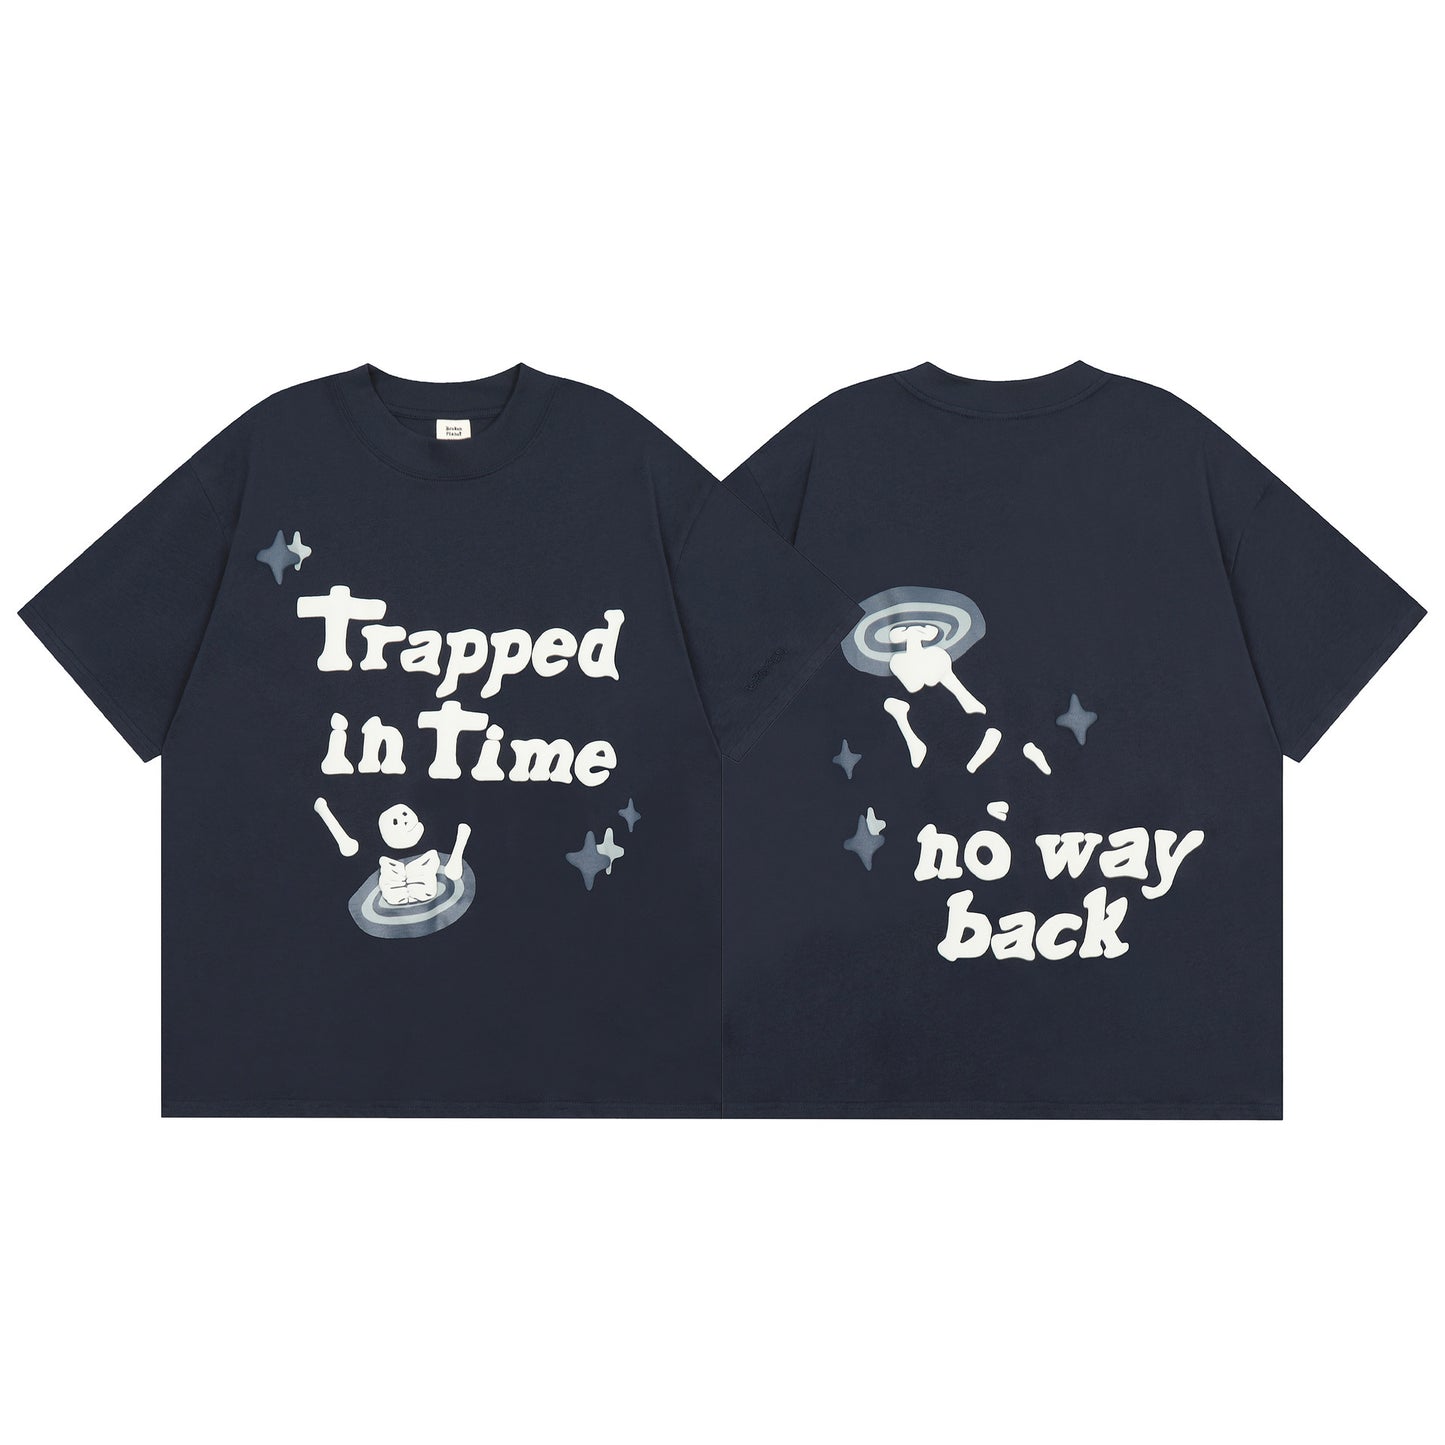 Broken Planet Men's Women's T-shirt 'trapped in time' Tee